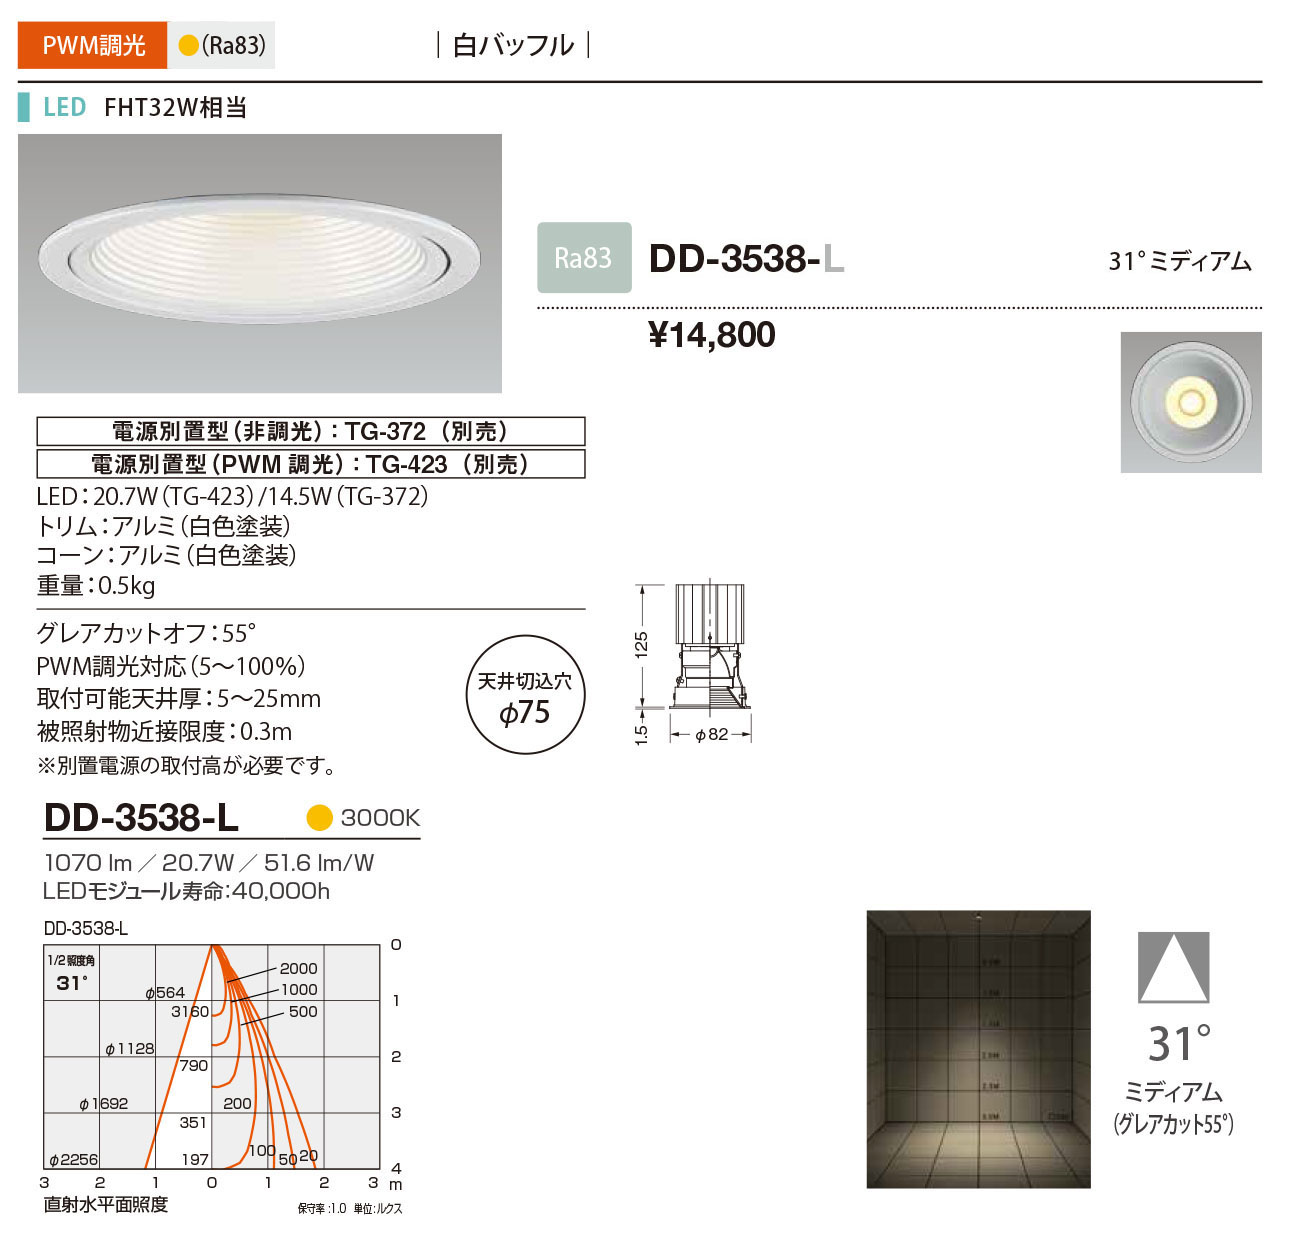 DD-3538-L RcƖ _ECg obt 75 LED dF  31x